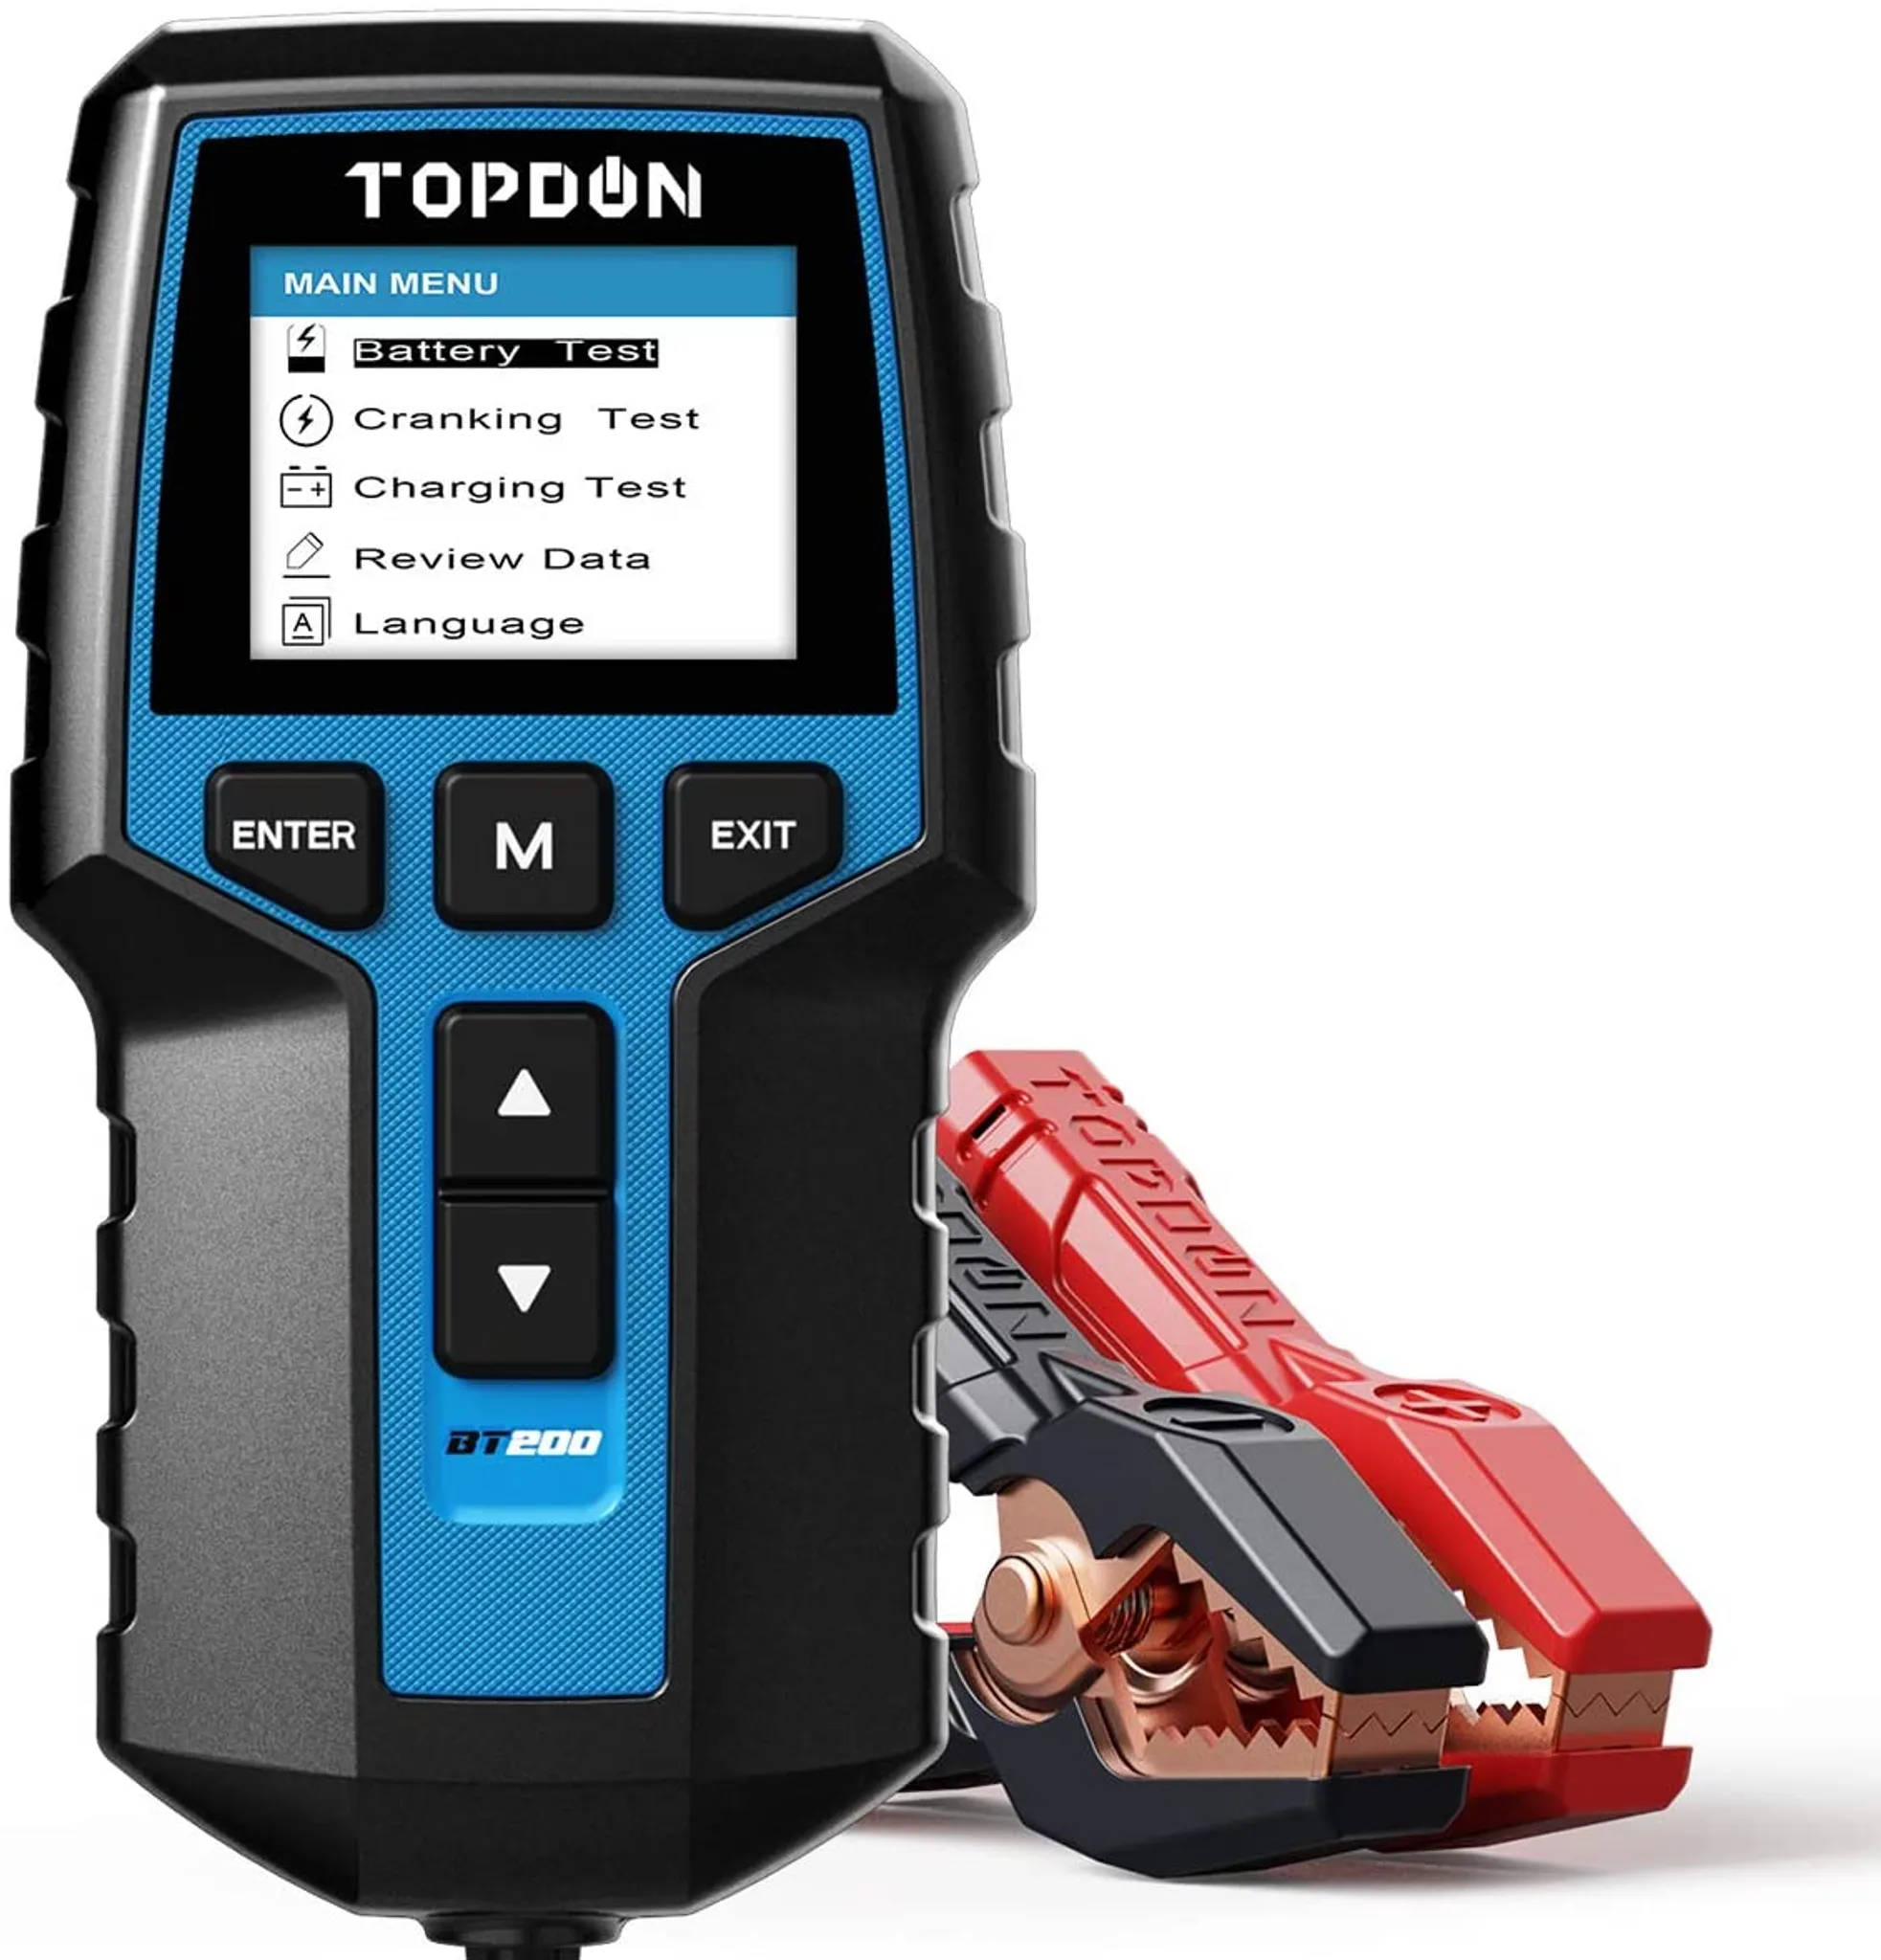 TOPDON BT100 Auto 12V Batterietester KFZ Akku Testgerät 100